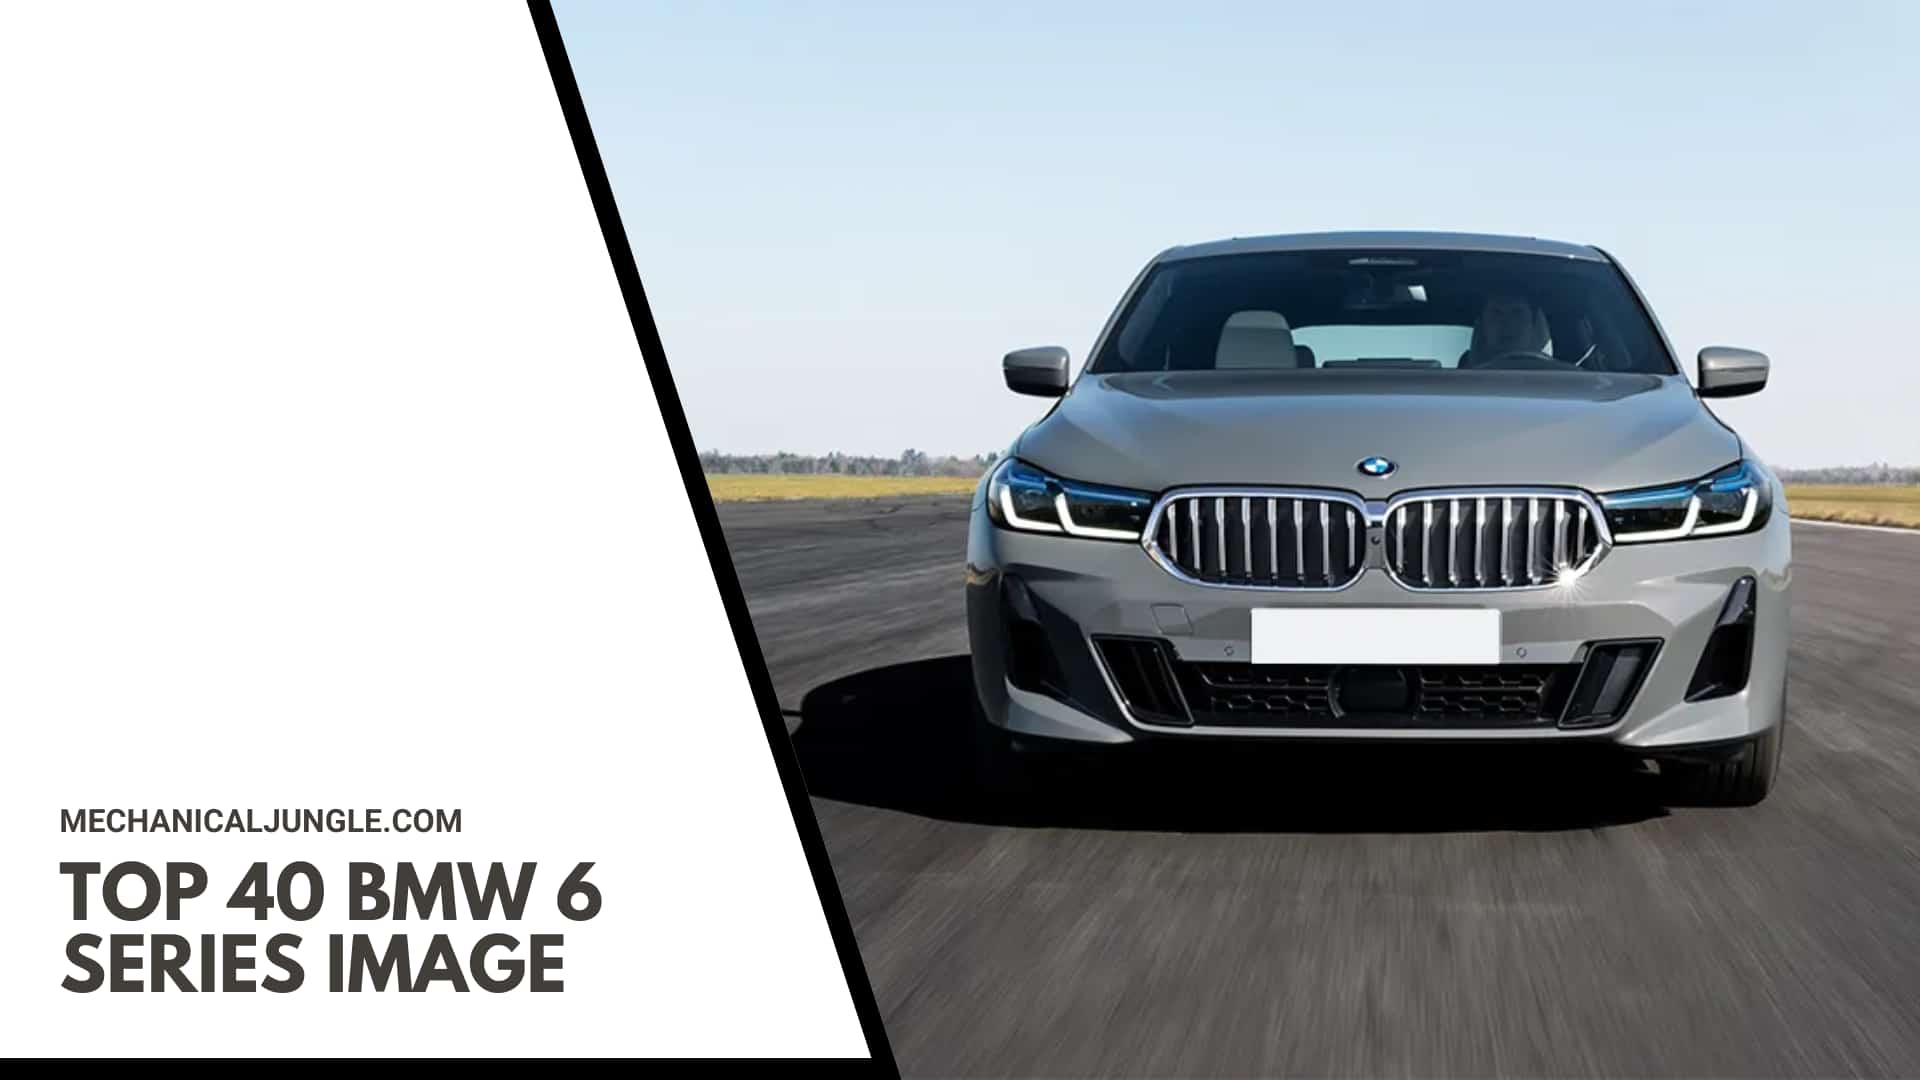 Top 40 BMW 6 Series Image